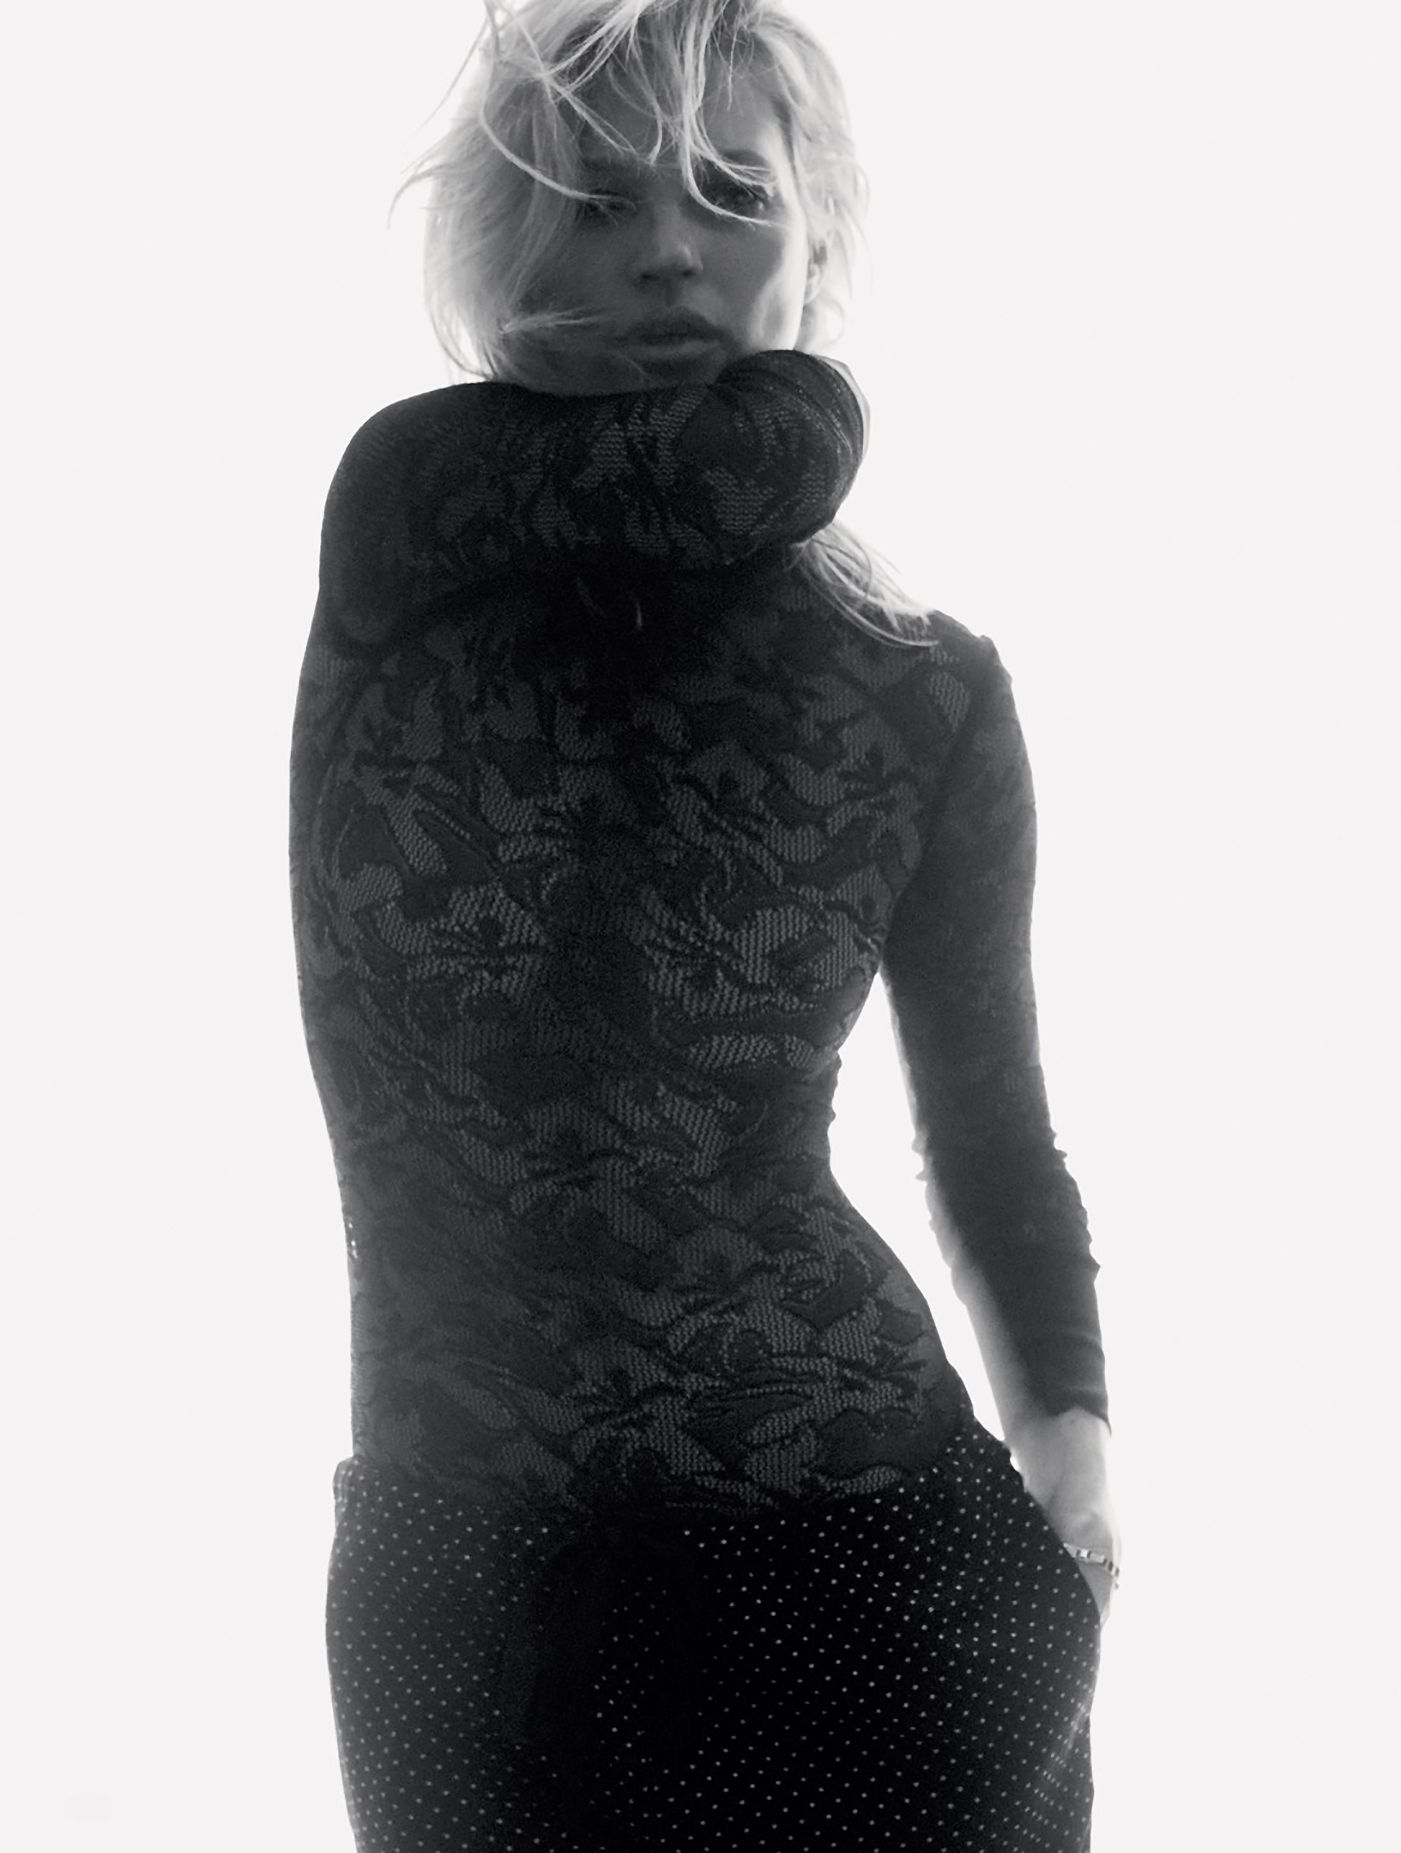 Kate Moss See Through (7 Photos)